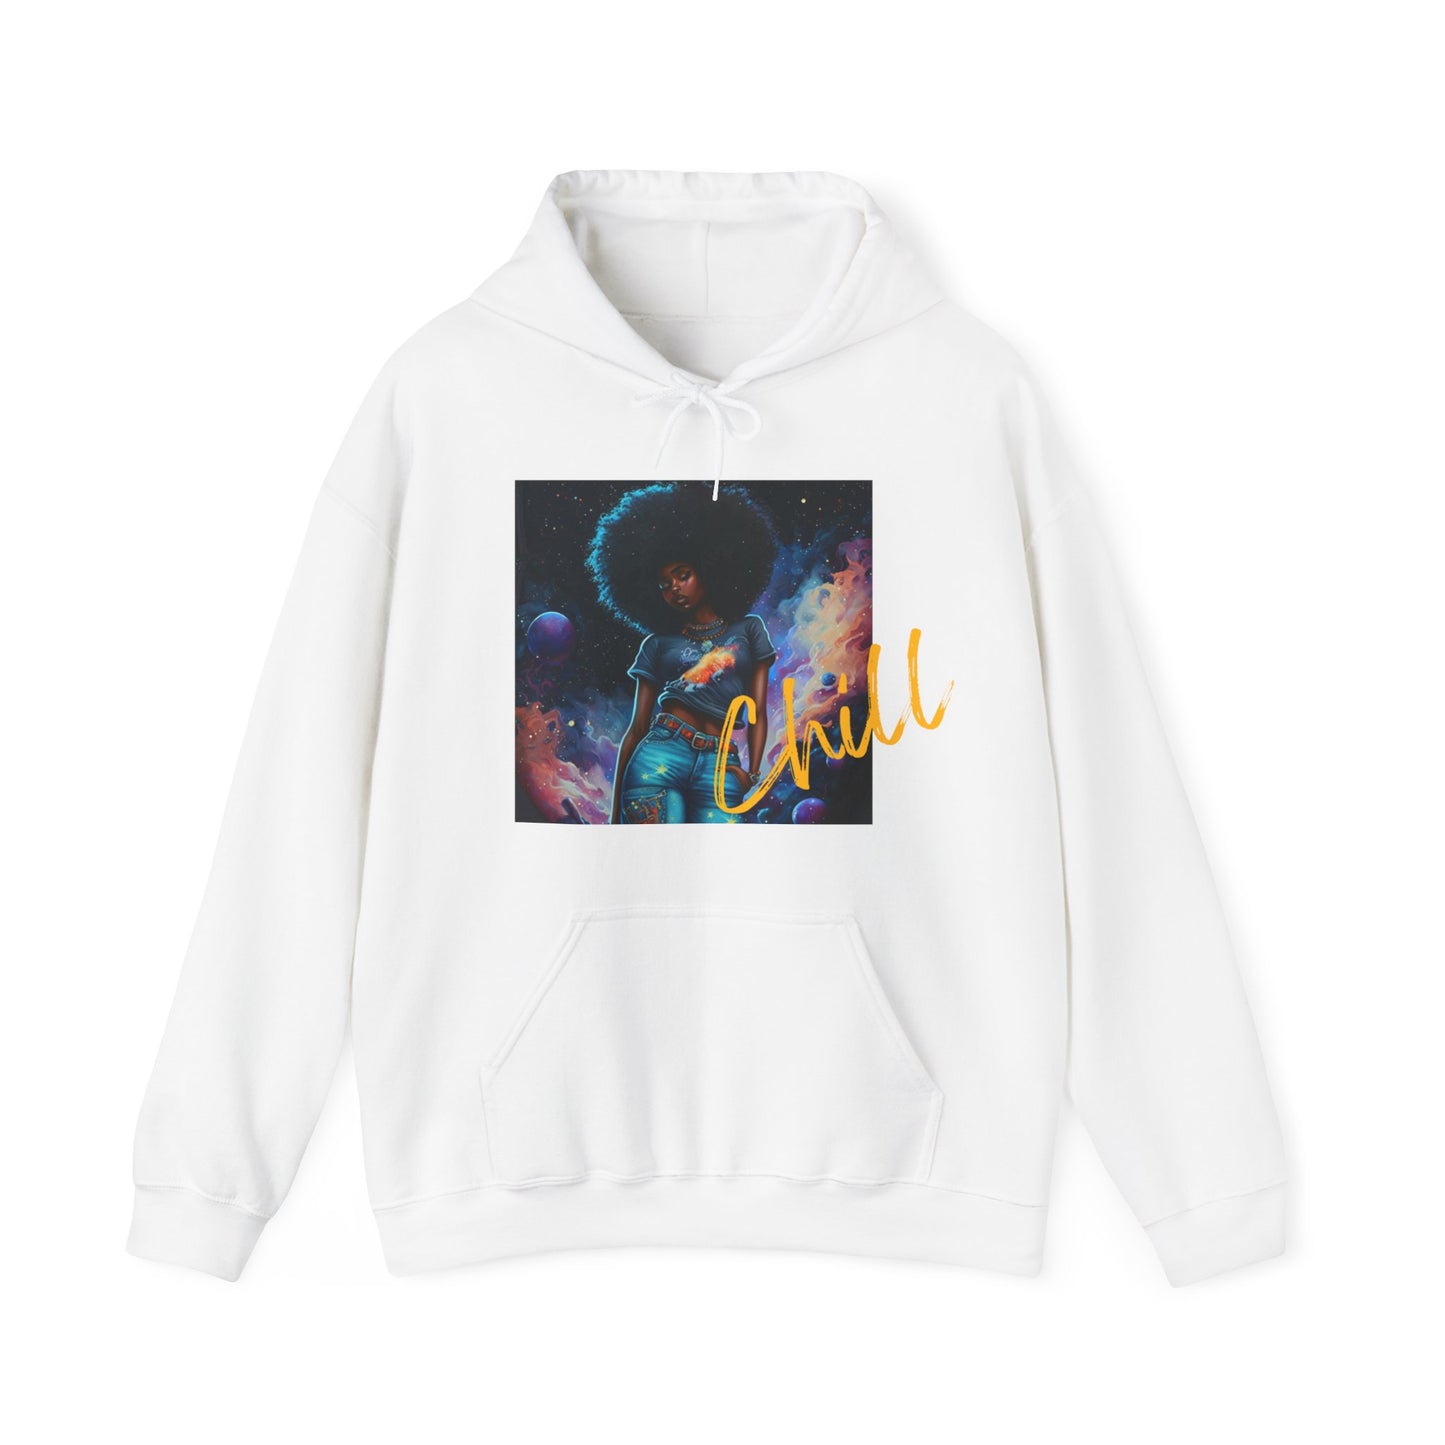 Chill black girl  Hooded Sweatshirt